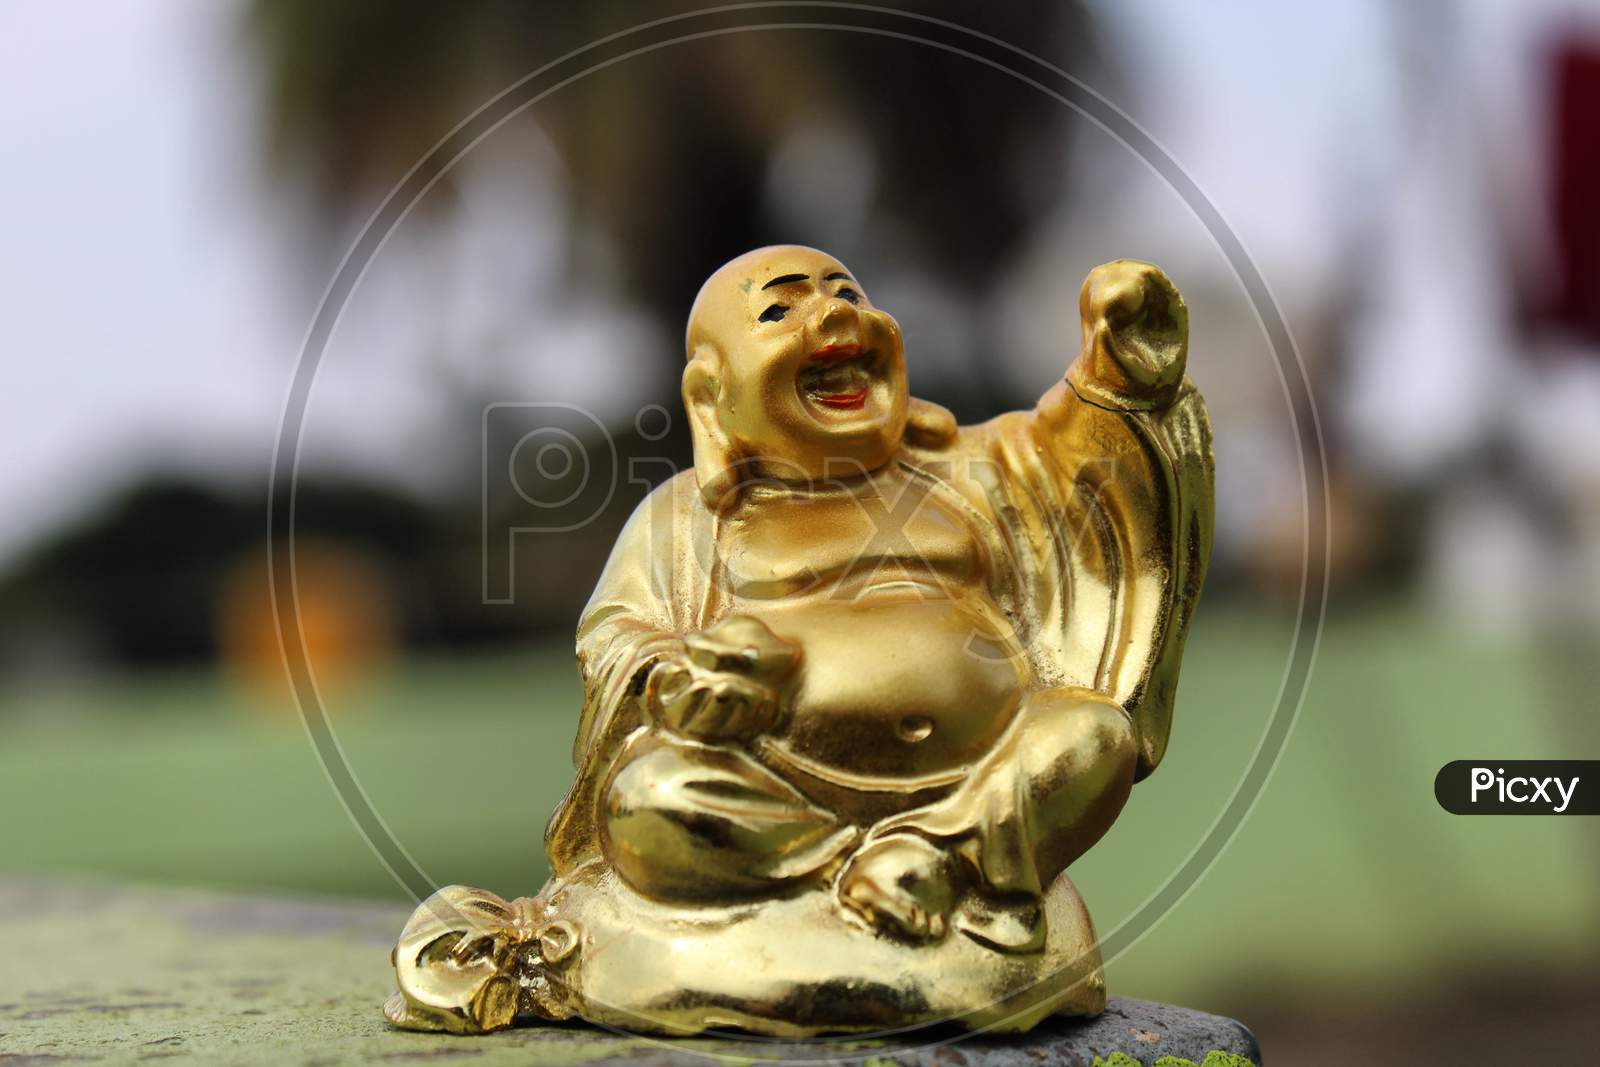 Laughing Buddha, closeup shot